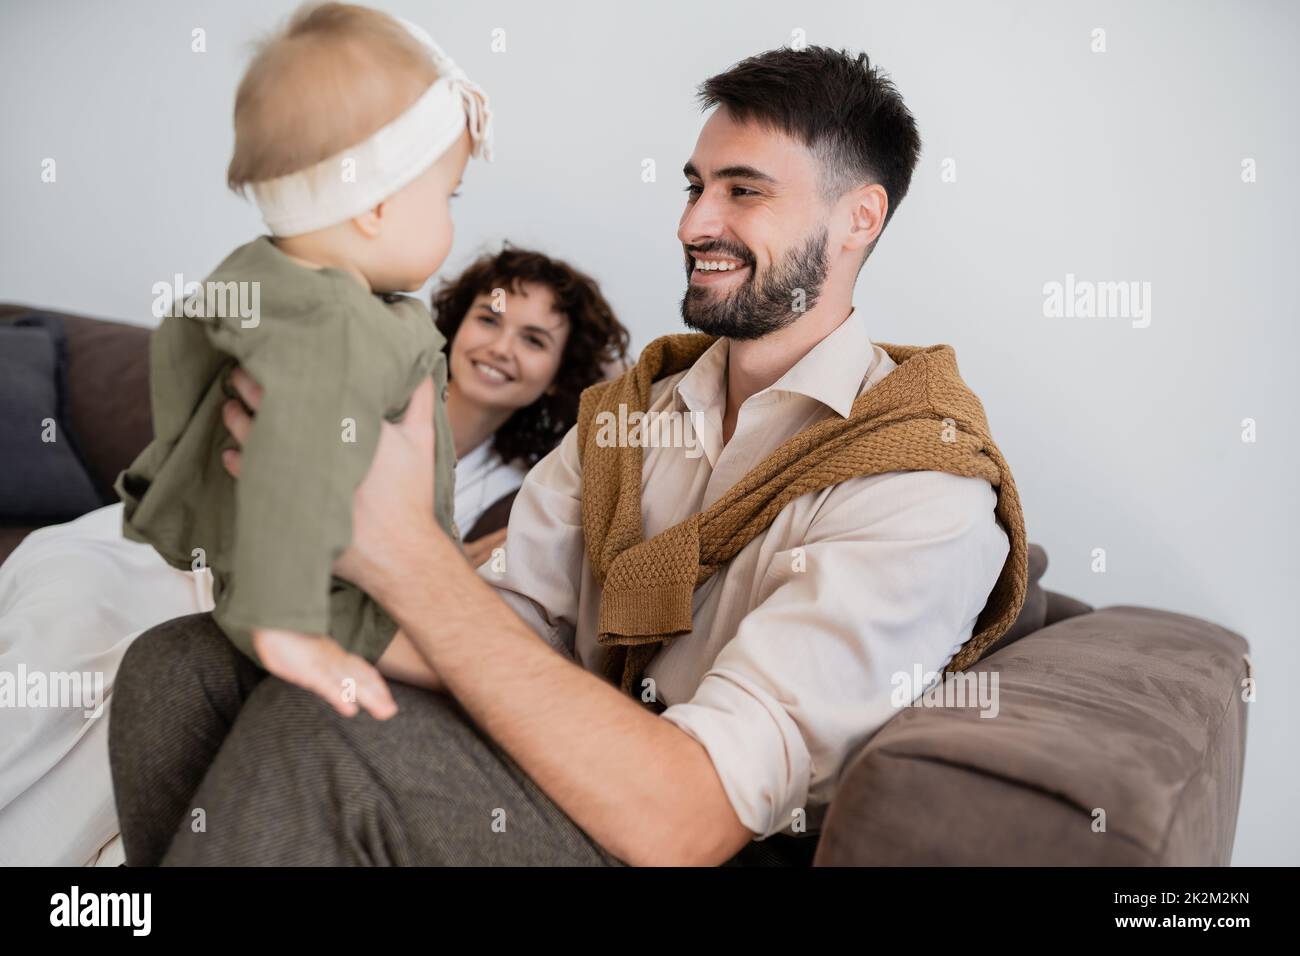 padre alegre sosteniendo a hija infantil cerca de feliz esposa borrosa en la sala de estar, imagen de archivo Foto de stock